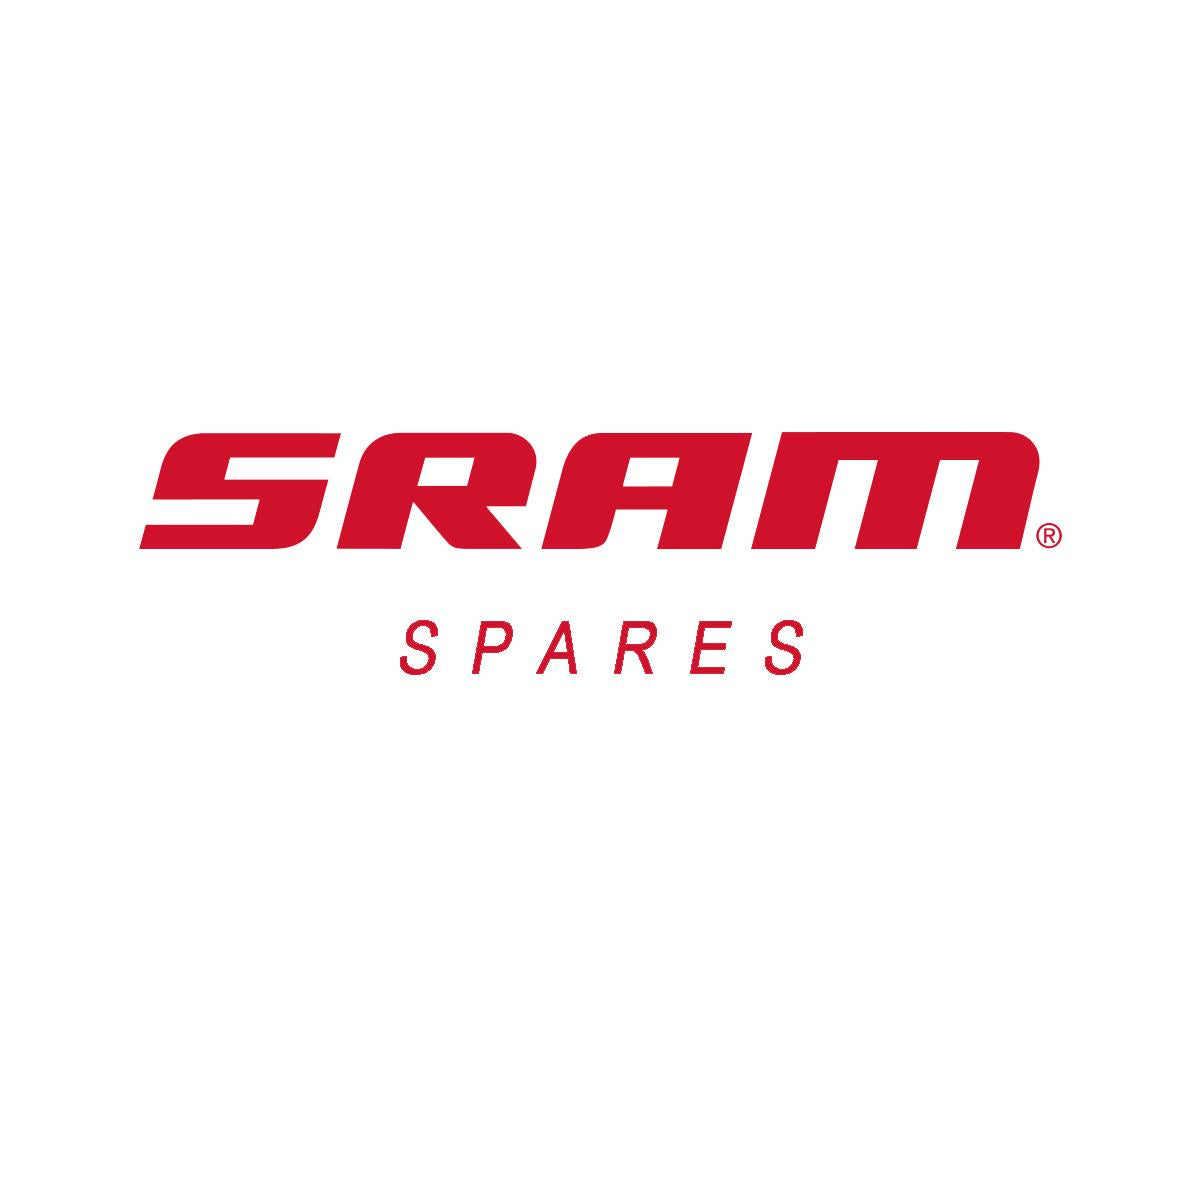 Sram Spare - Disc Brake Service Lever Internals Gen 2 Guide Rs Qty 1